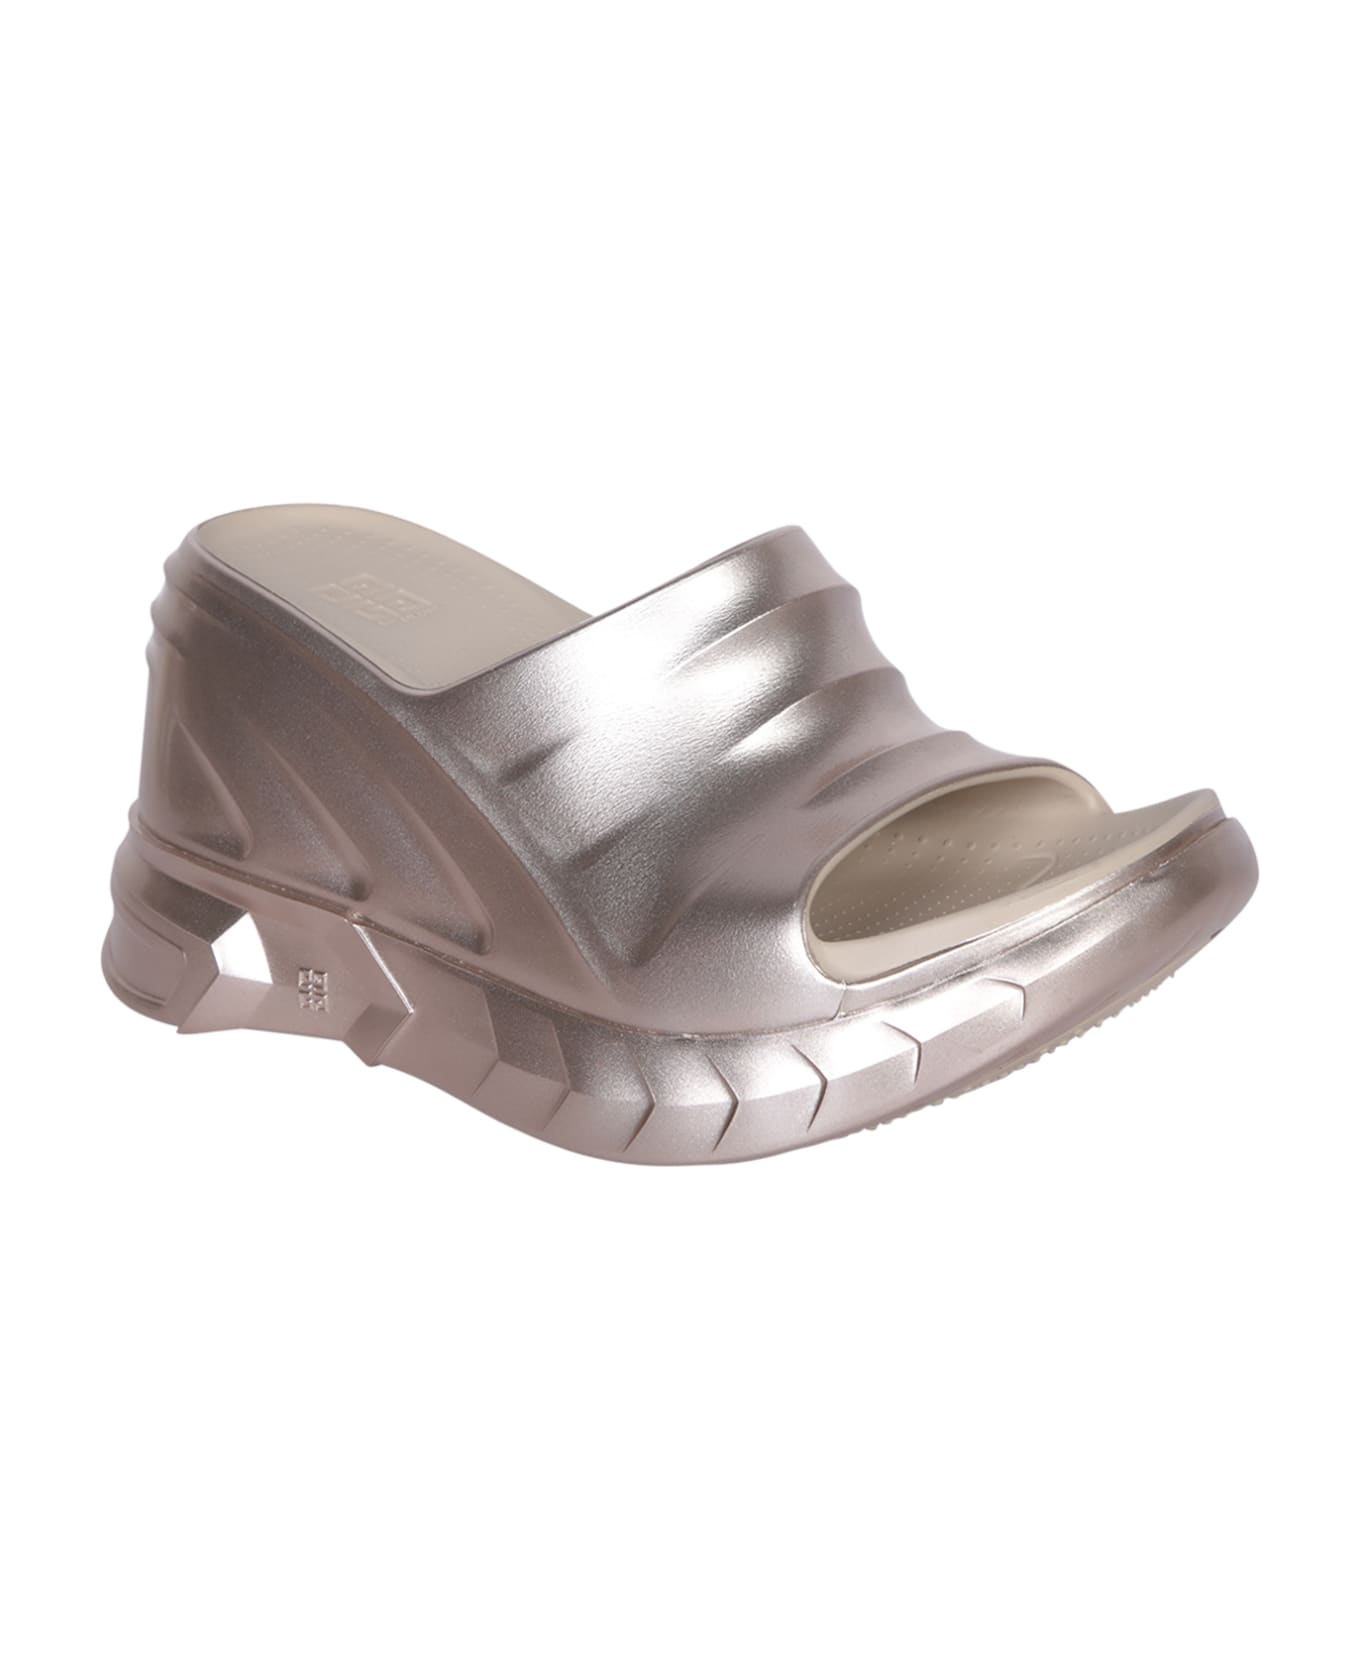 Givenchy Marshmallow Wedge Sandals - Metallic サンダル